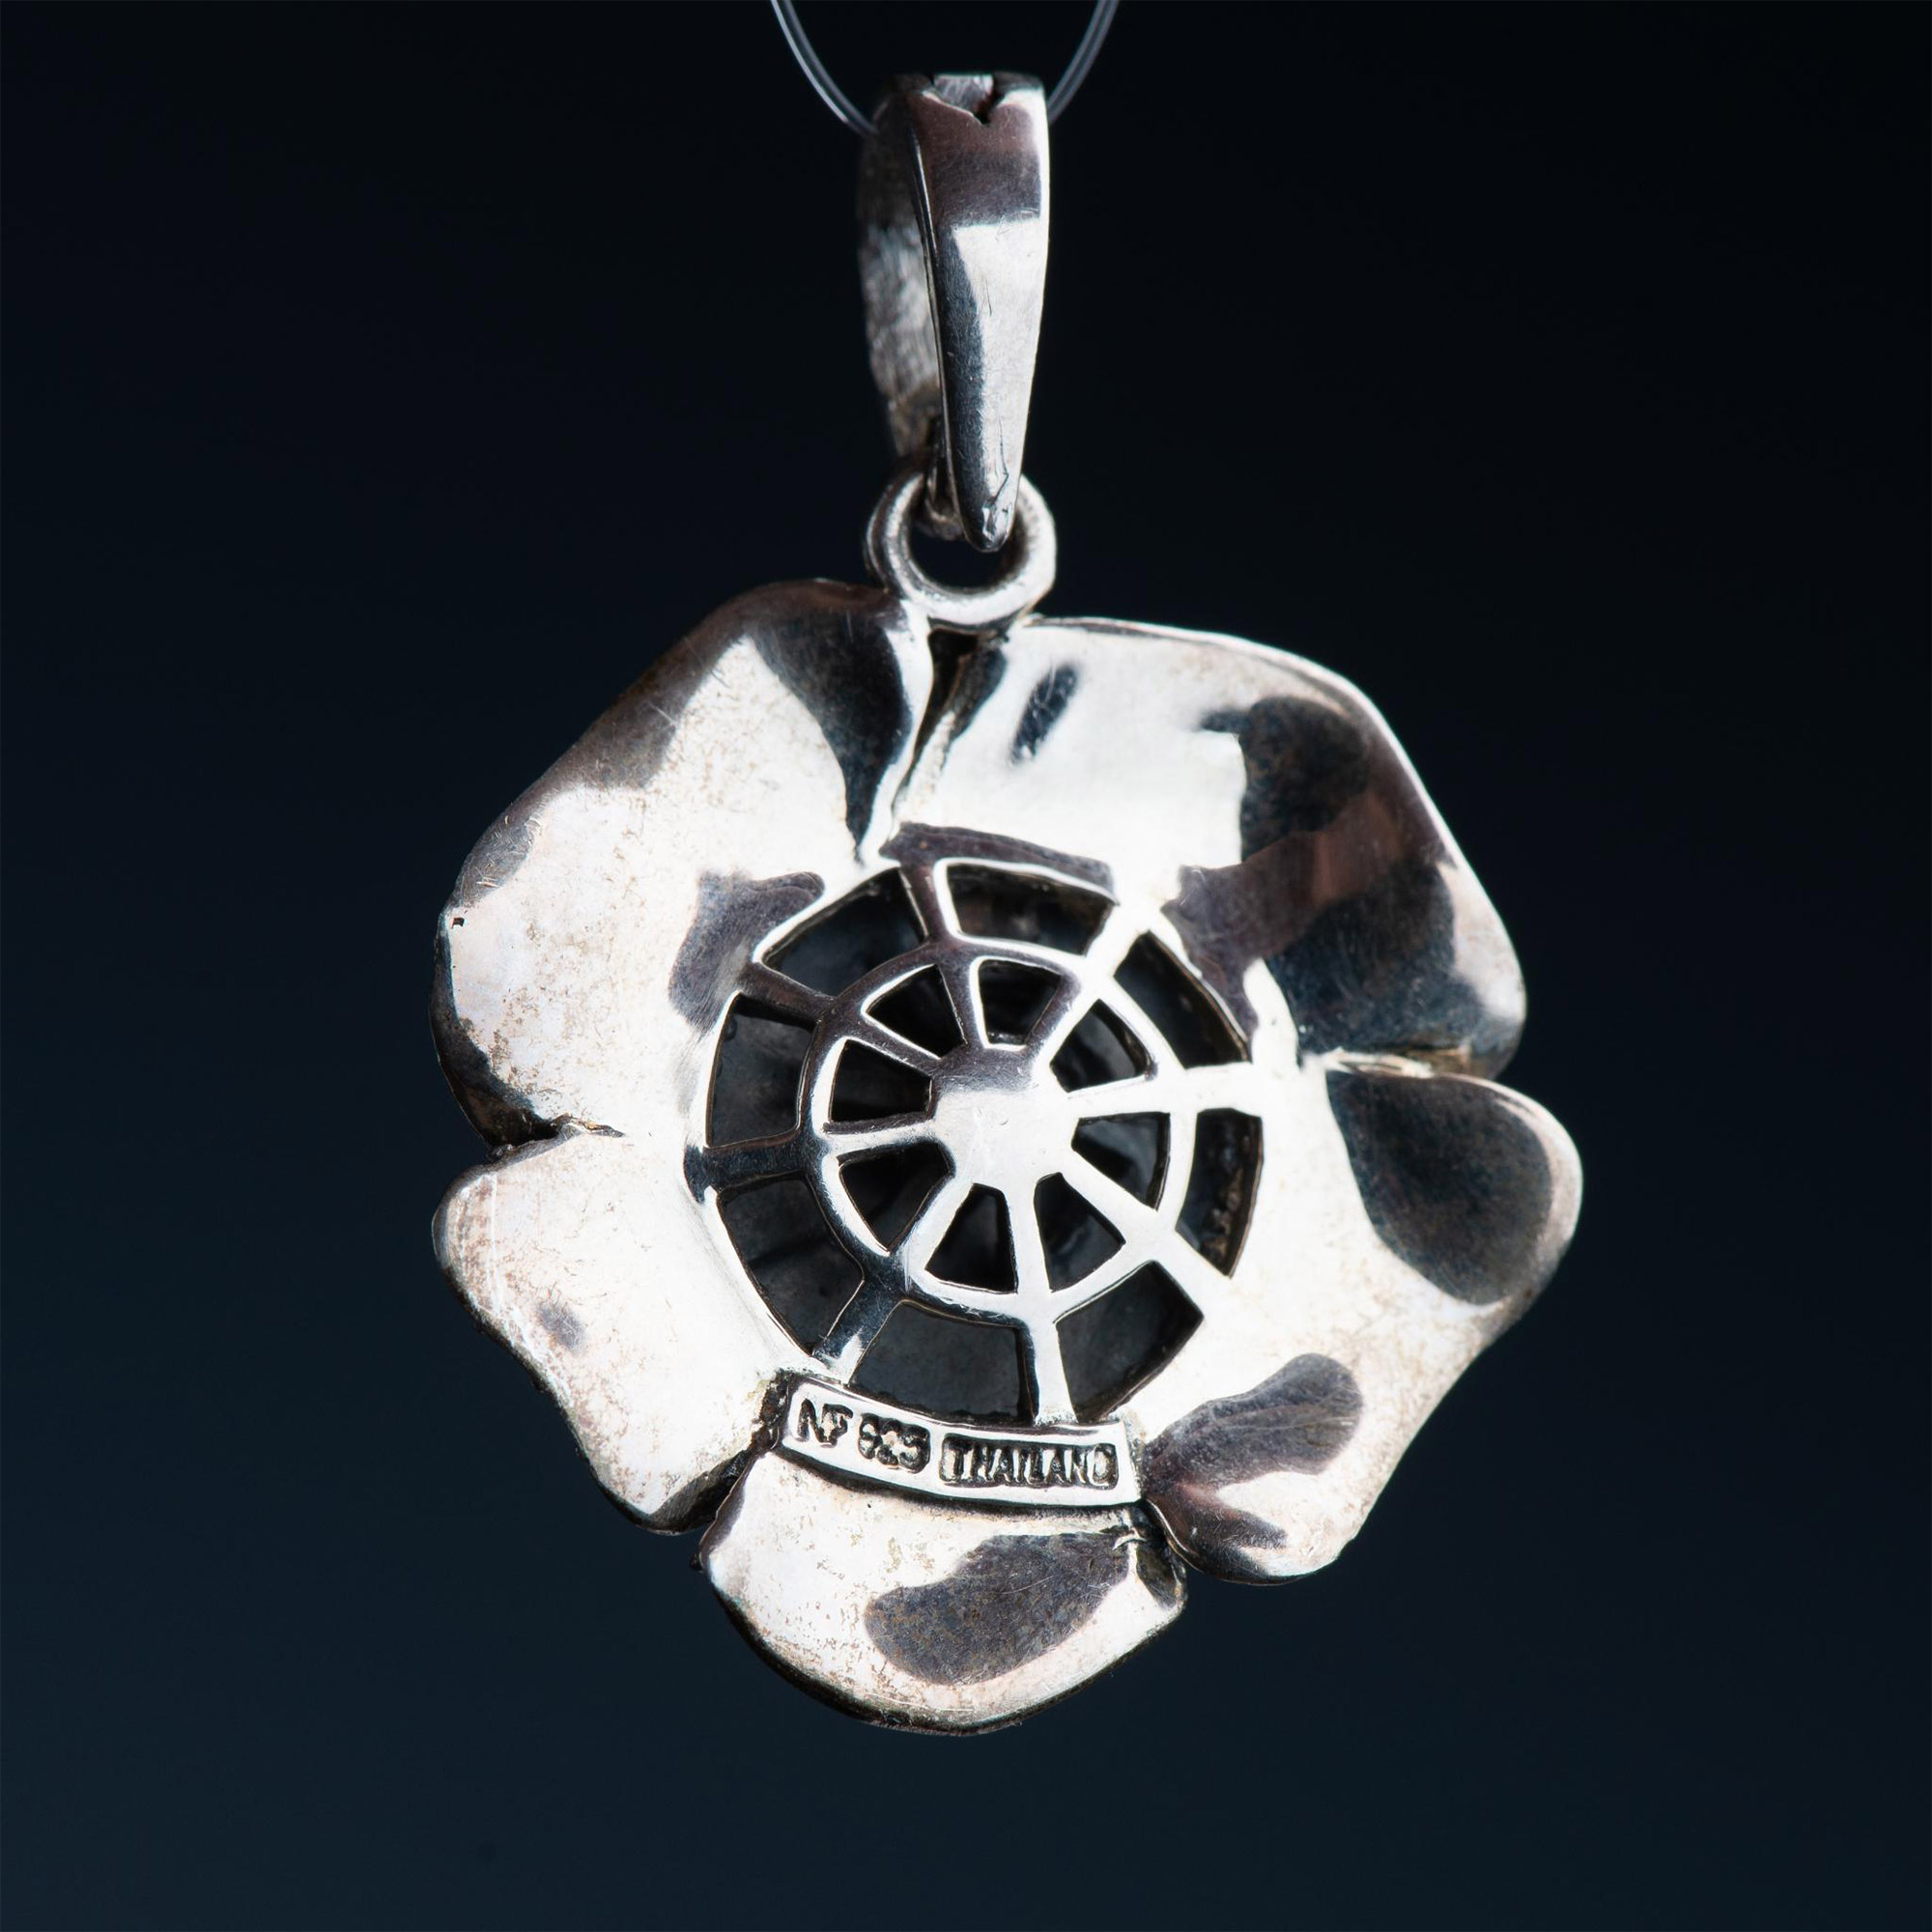 Sparkling Sterling Silver & Marcasite Flower Pendant - Image 2 of 2